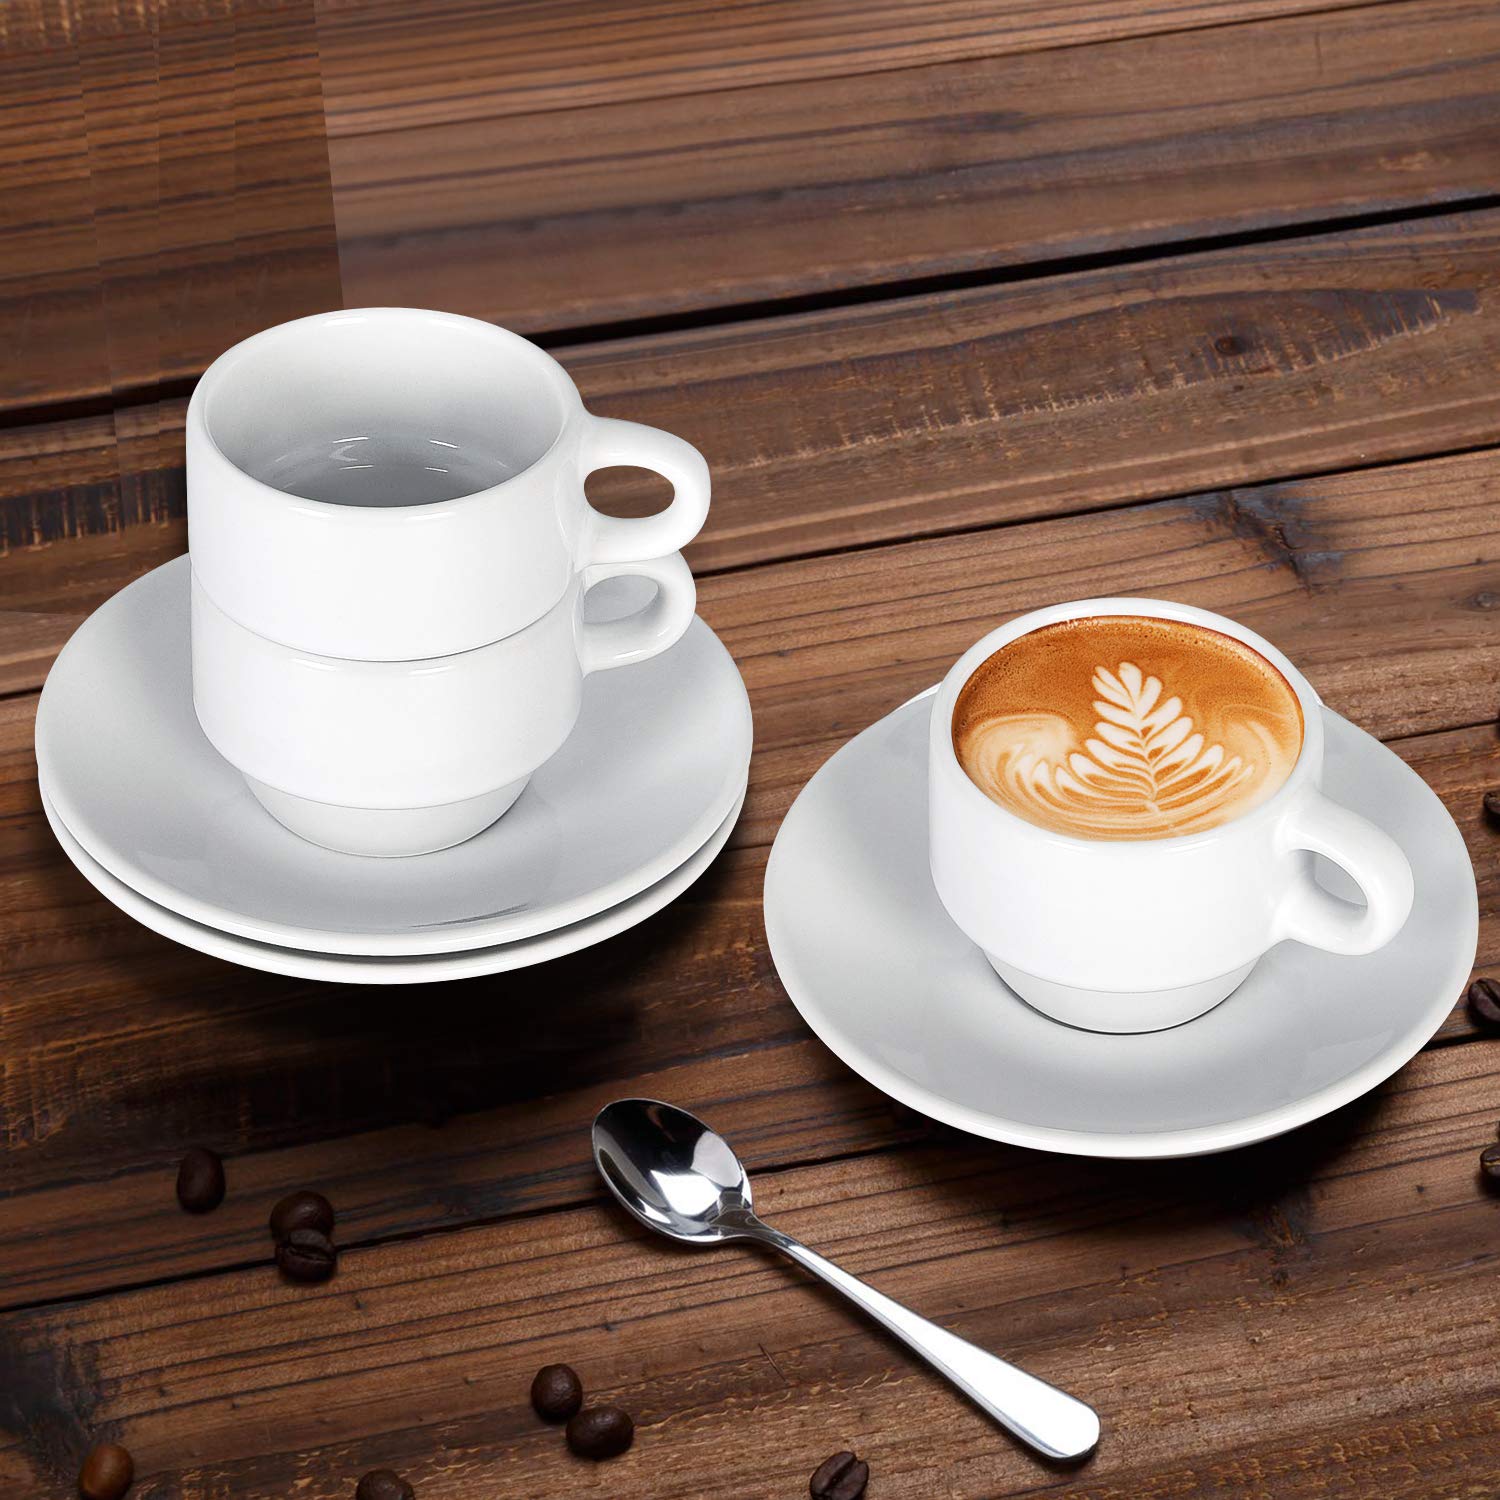 Lifecapido Espresso Cups and Saucers with Stand Rack, Porcelain Stackable Espresso Mugs, 2.5 Ounce Demitasse Cups Designed for Espresso, Latte, Cafe, Mocha - Set of 6 (White)